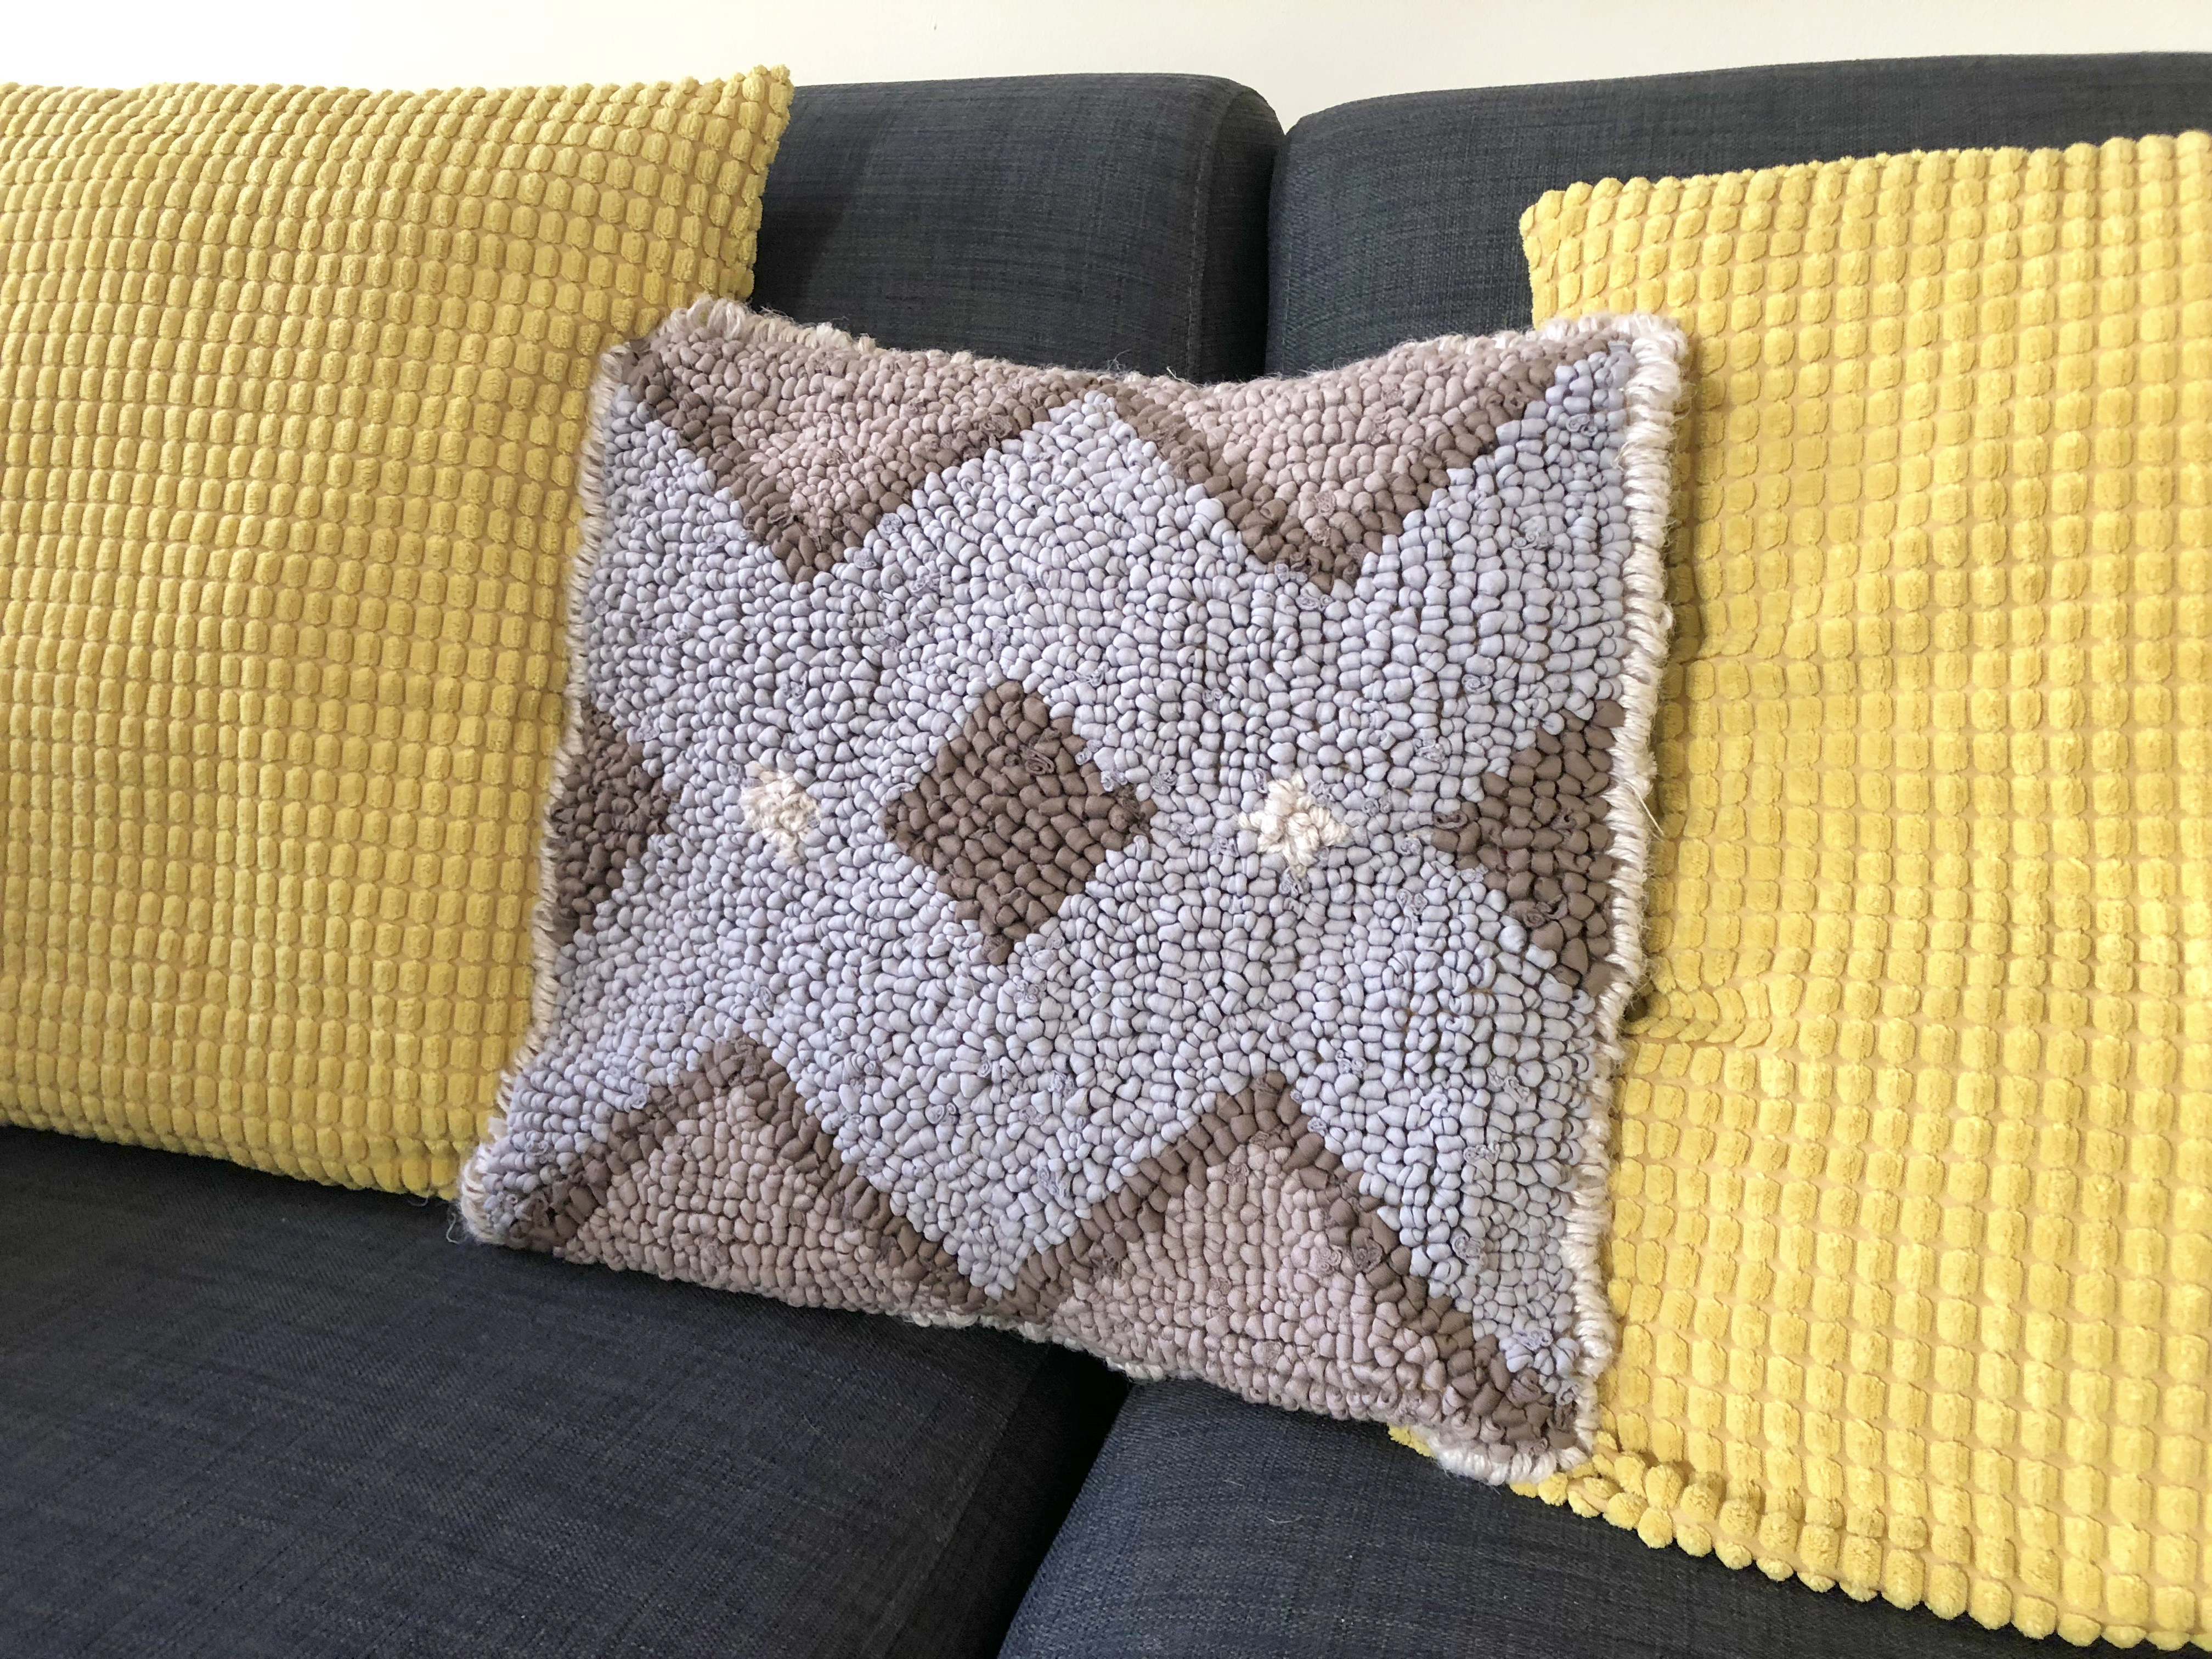 Rag Rugging with t-shirt yarn. Grey and brown loopy rag rug cushion in a geometric design made using Hoooked t-shirt yarn